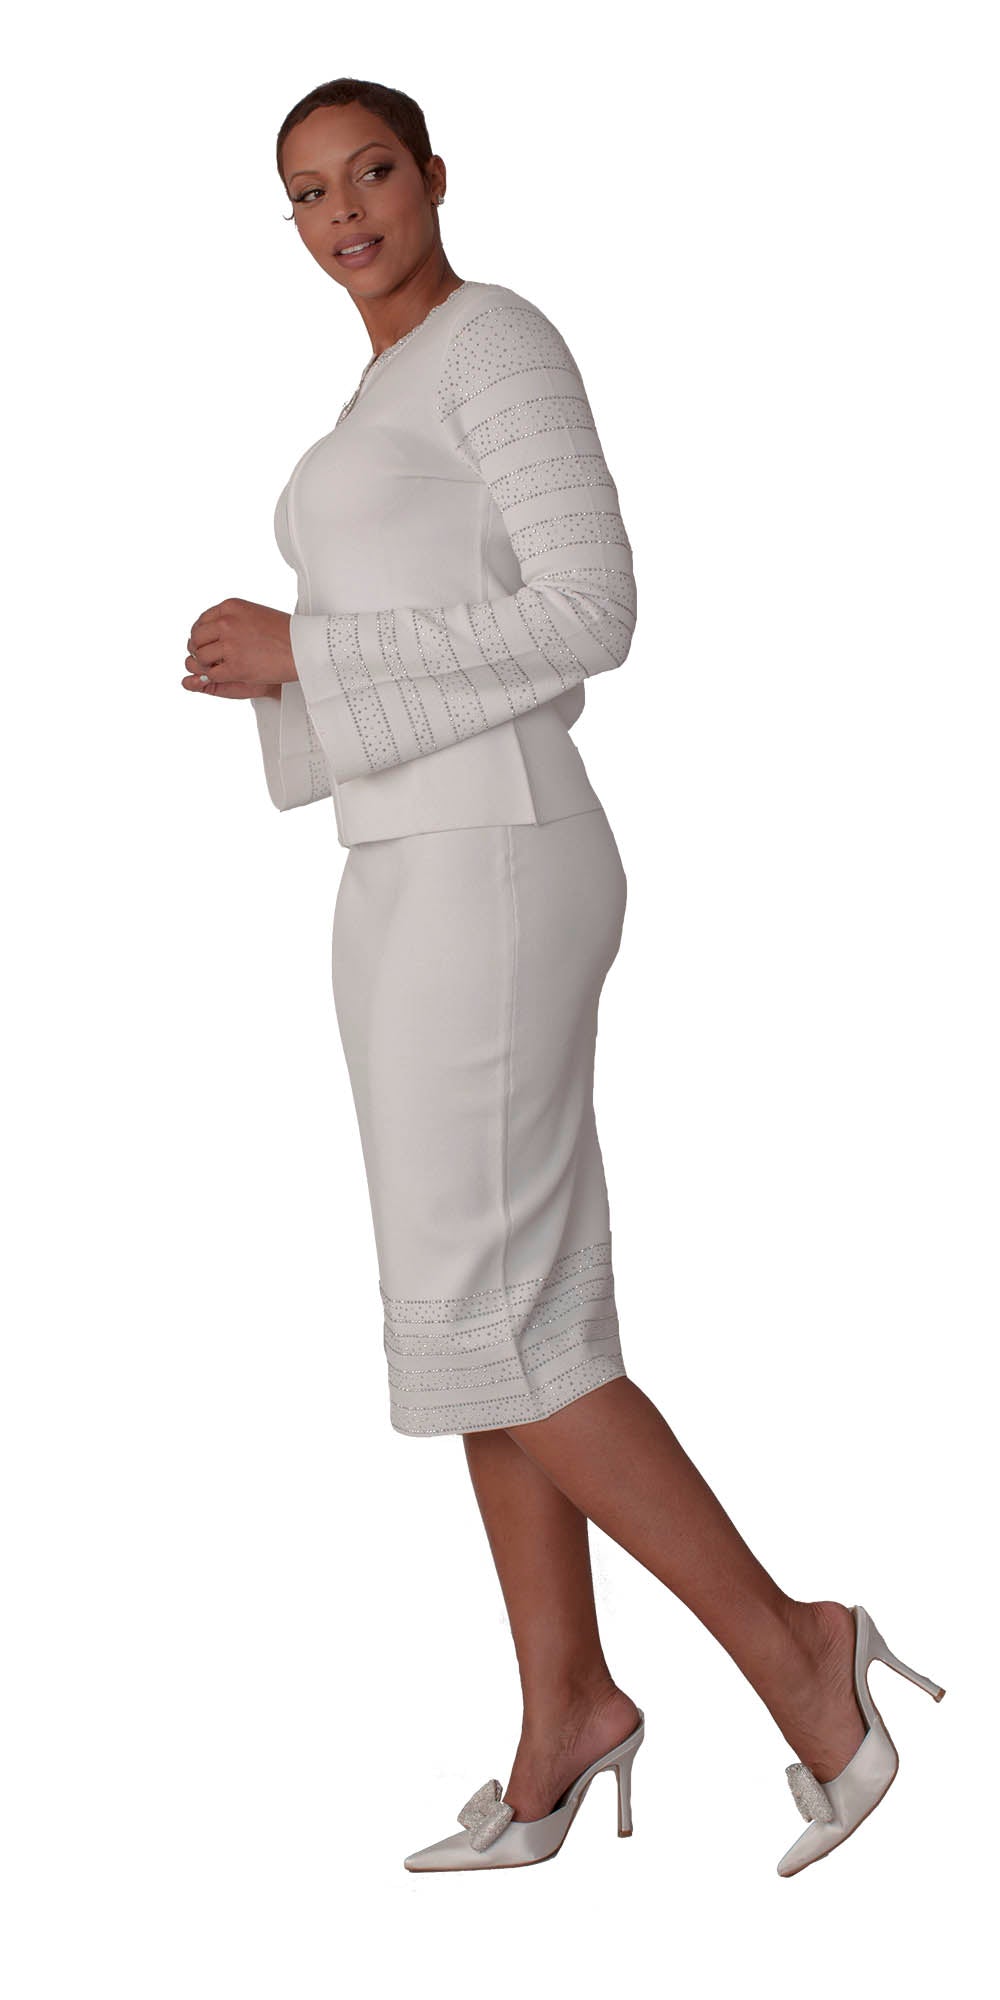 Kayla - 5327 - White Silver - Embellished Knit 2pc Skirt Set